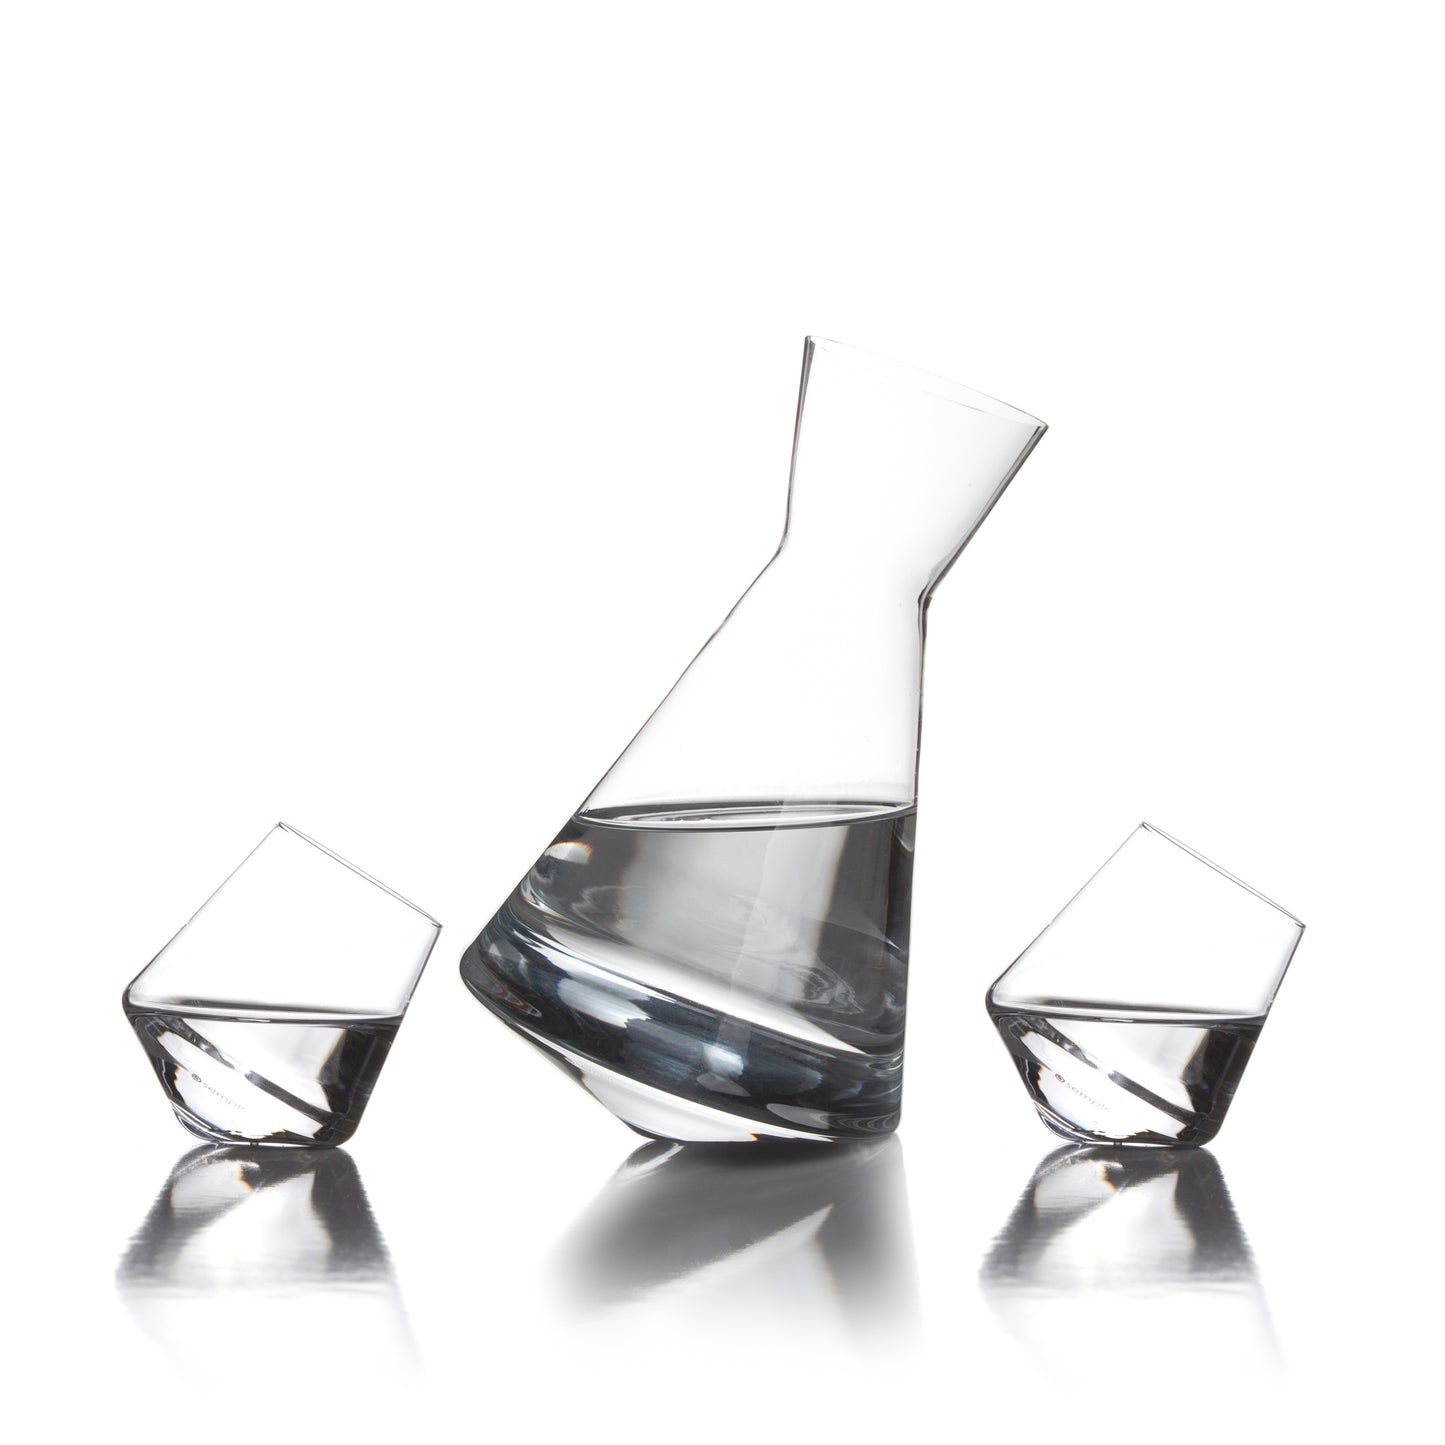 Vaso Sake Decanter and Cupa Shot Glass Set